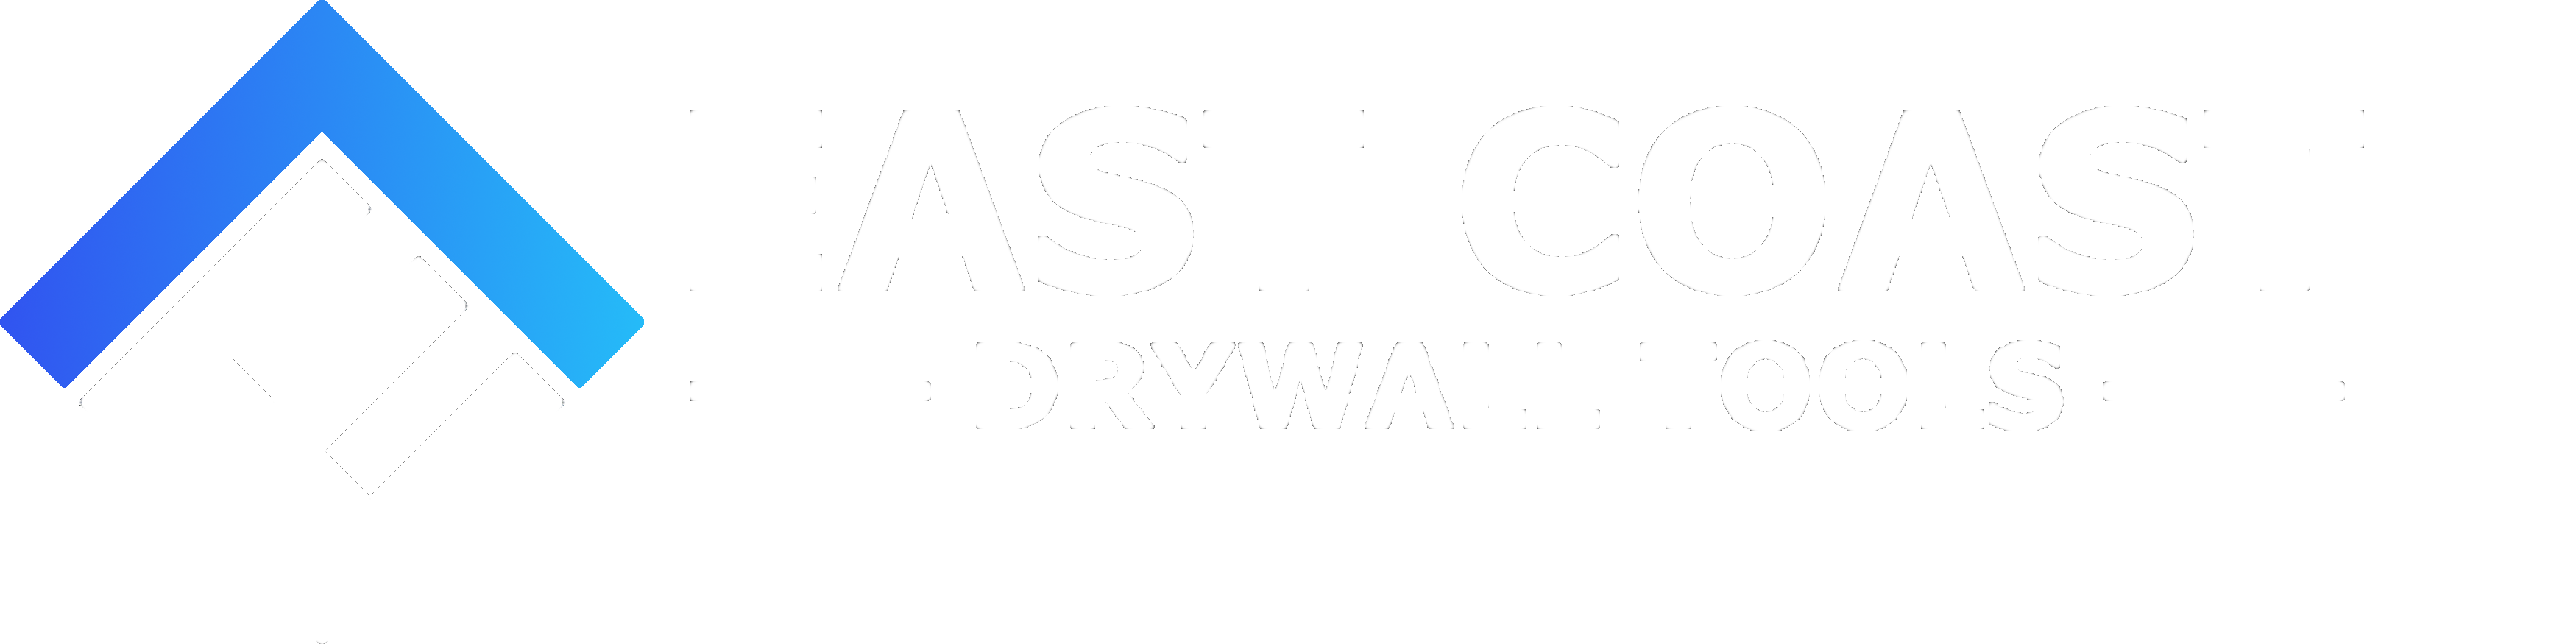 East Coast Drywall Tools Inc.